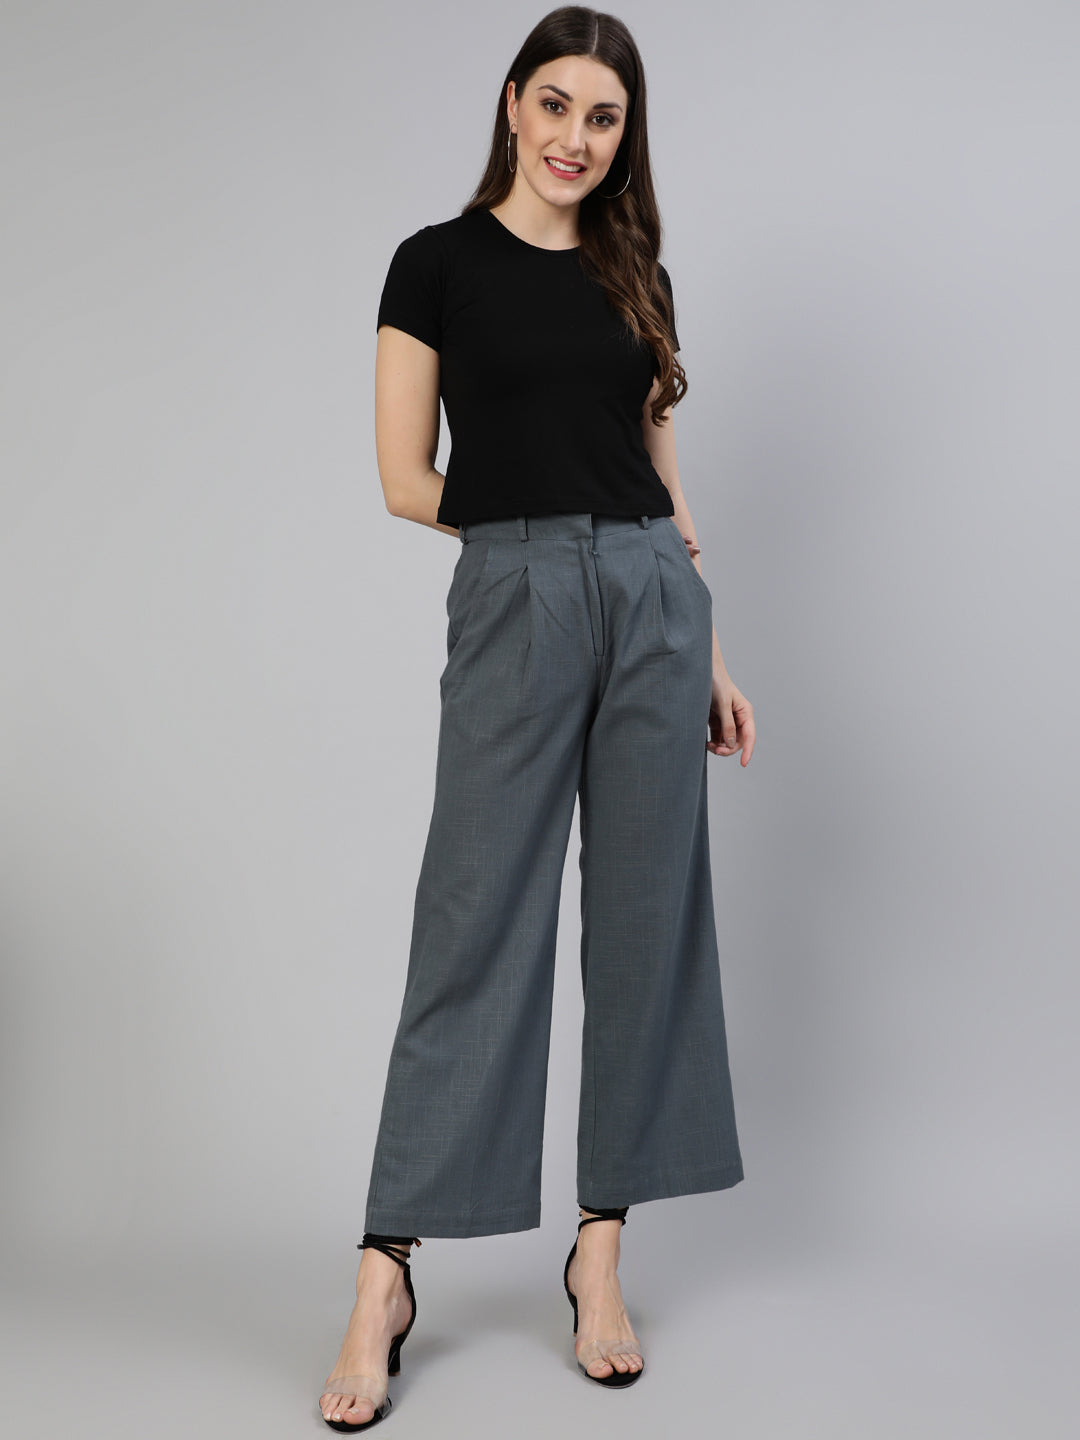 Shop best casual pants for women